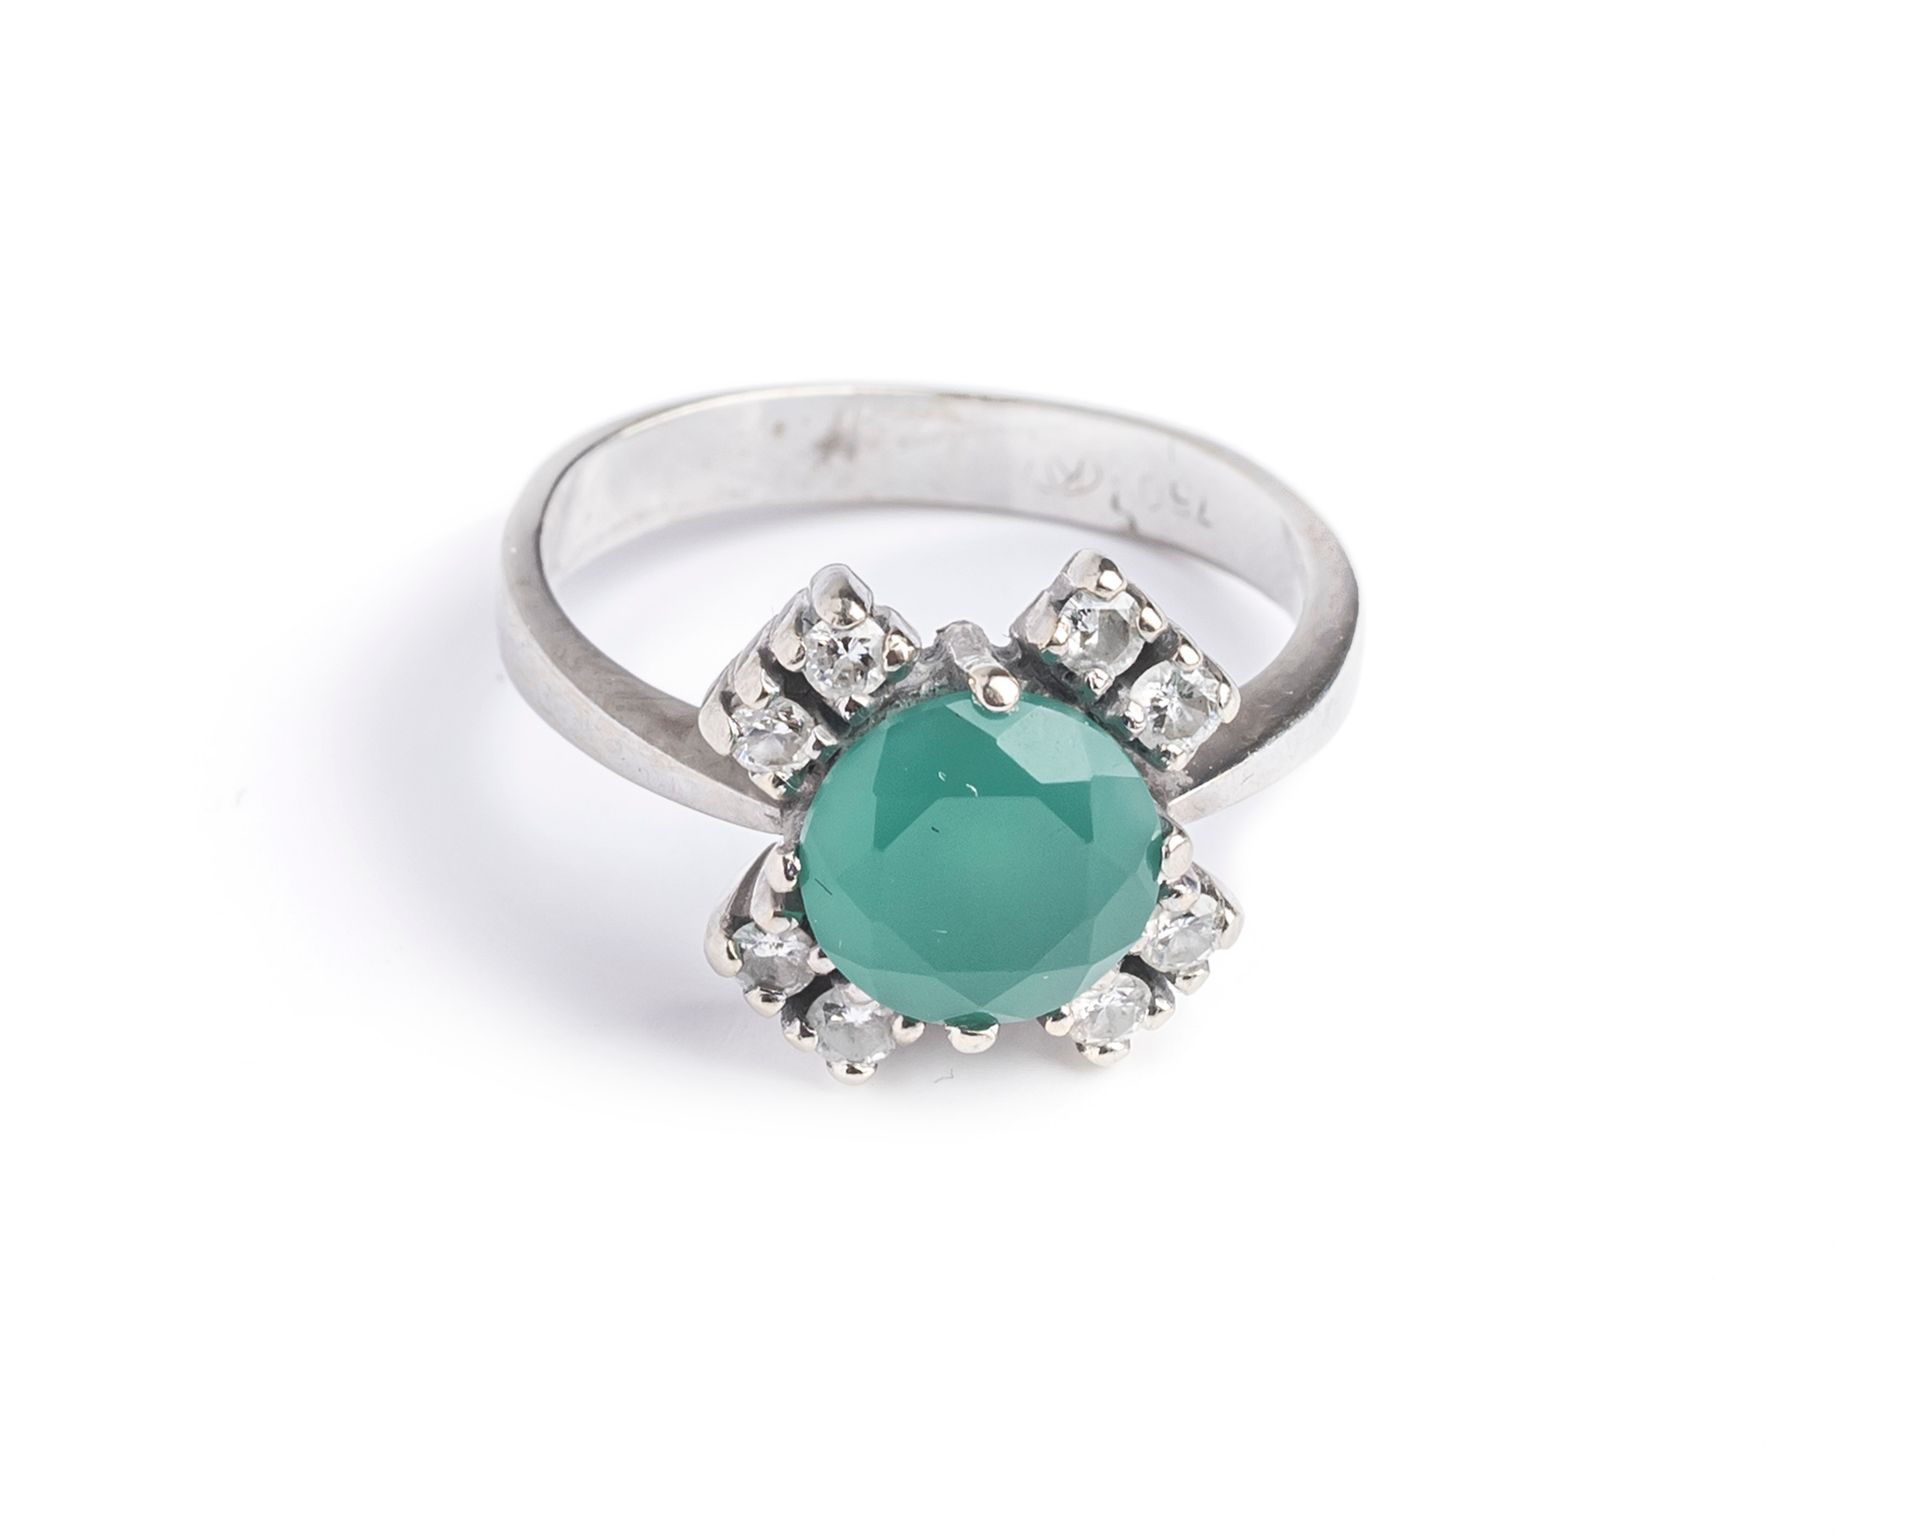 Null 18K（750千分之一）白金戒指，镶有圆形切面绿玉髓，并以八颗明亮式切割钻石作点缀
手指尺寸：52
毛重：5.4克